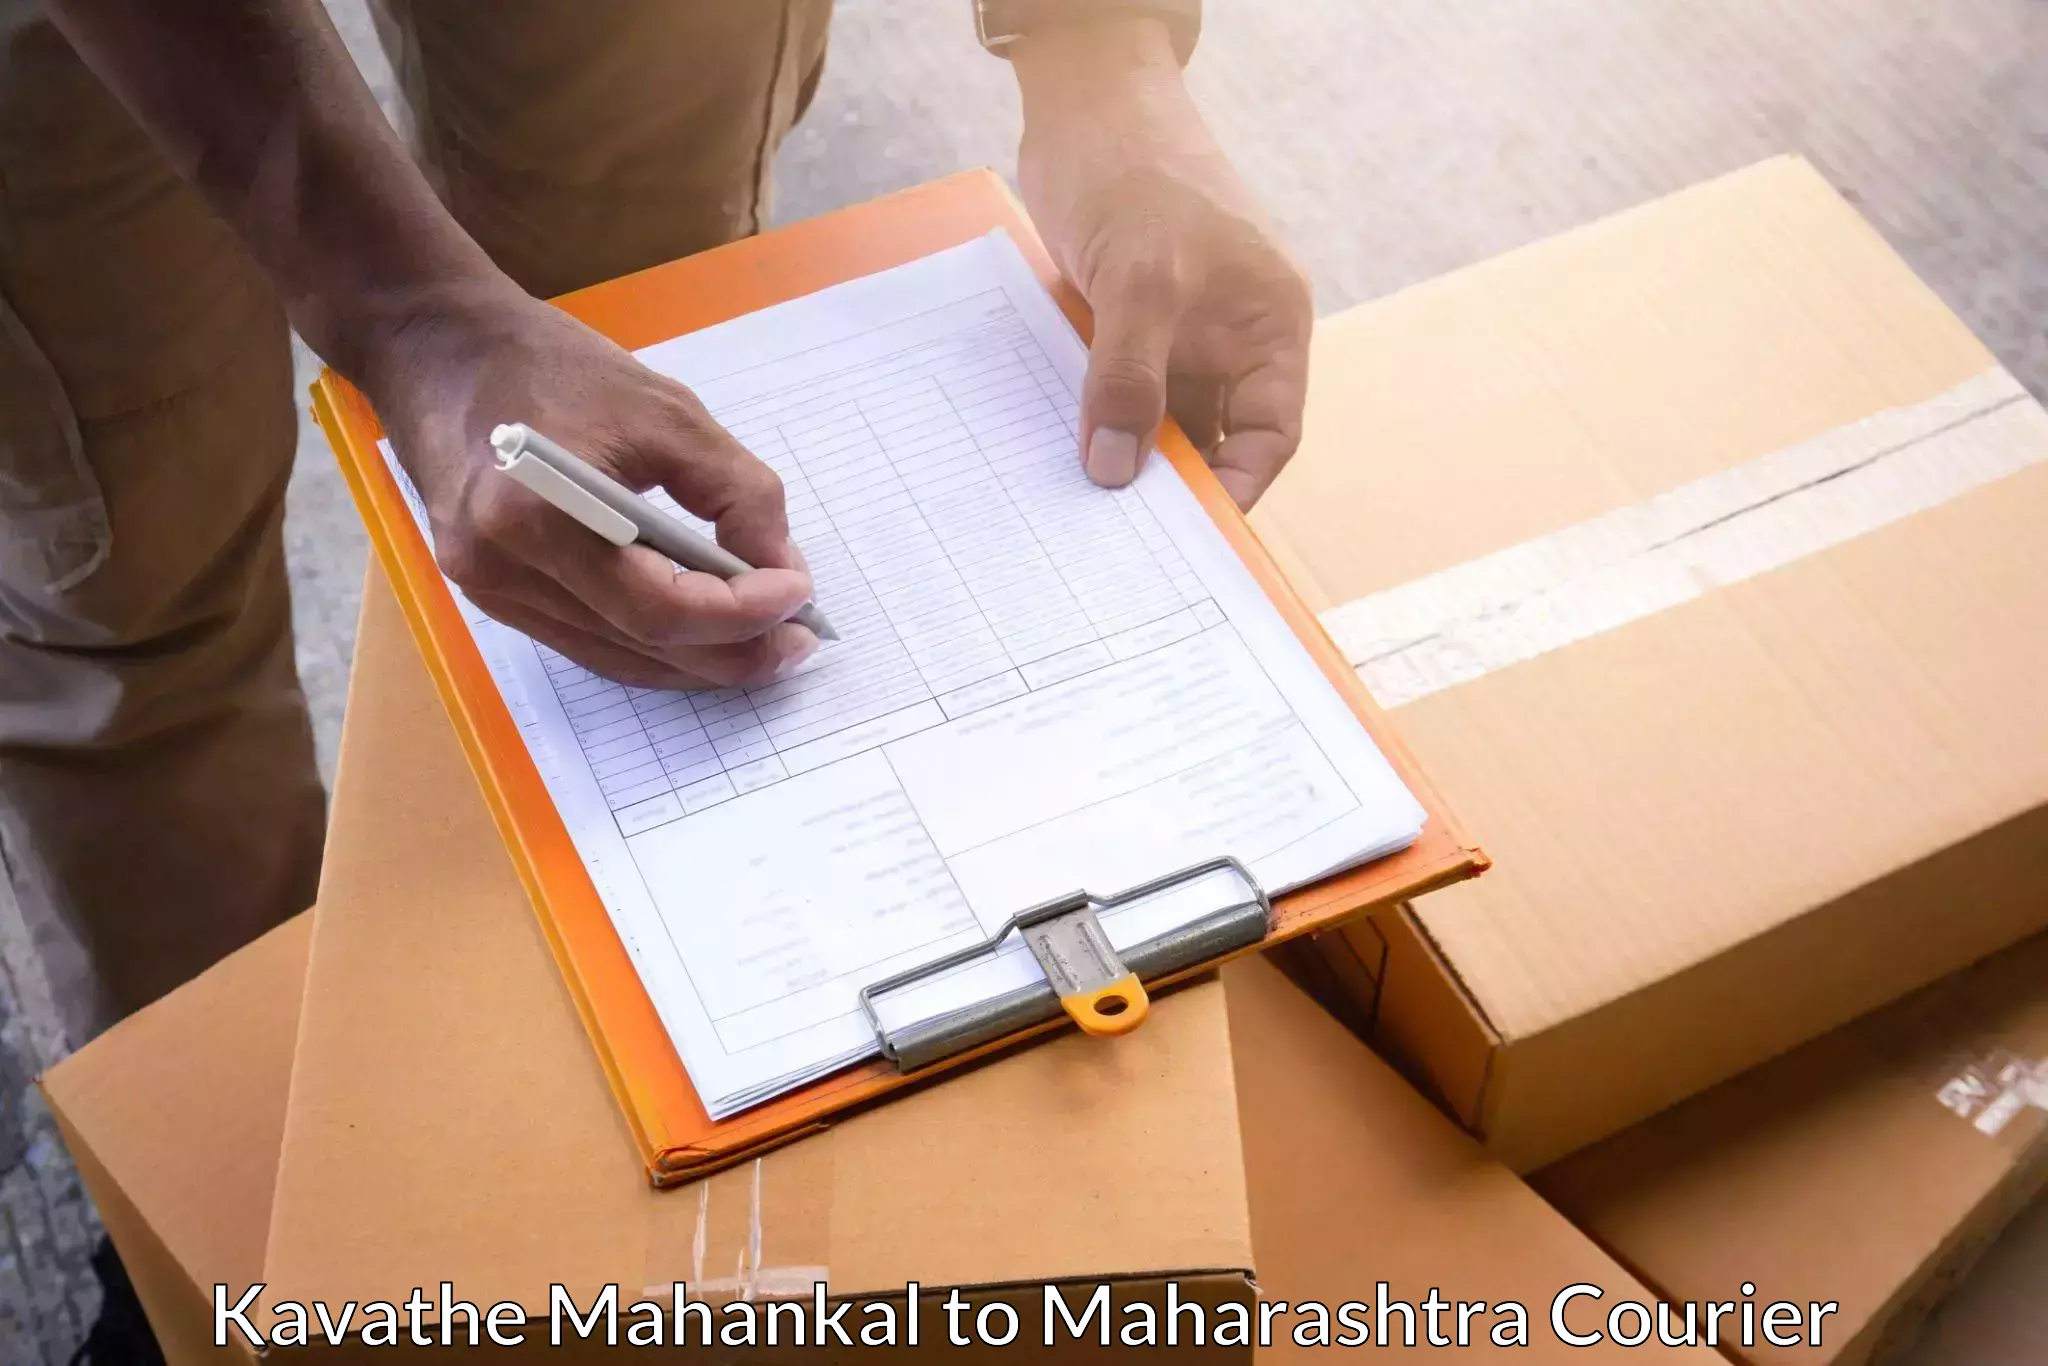 Comprehensive freight services Kavathe Mahankal to Tata Institute of Social Sciences Mumbai